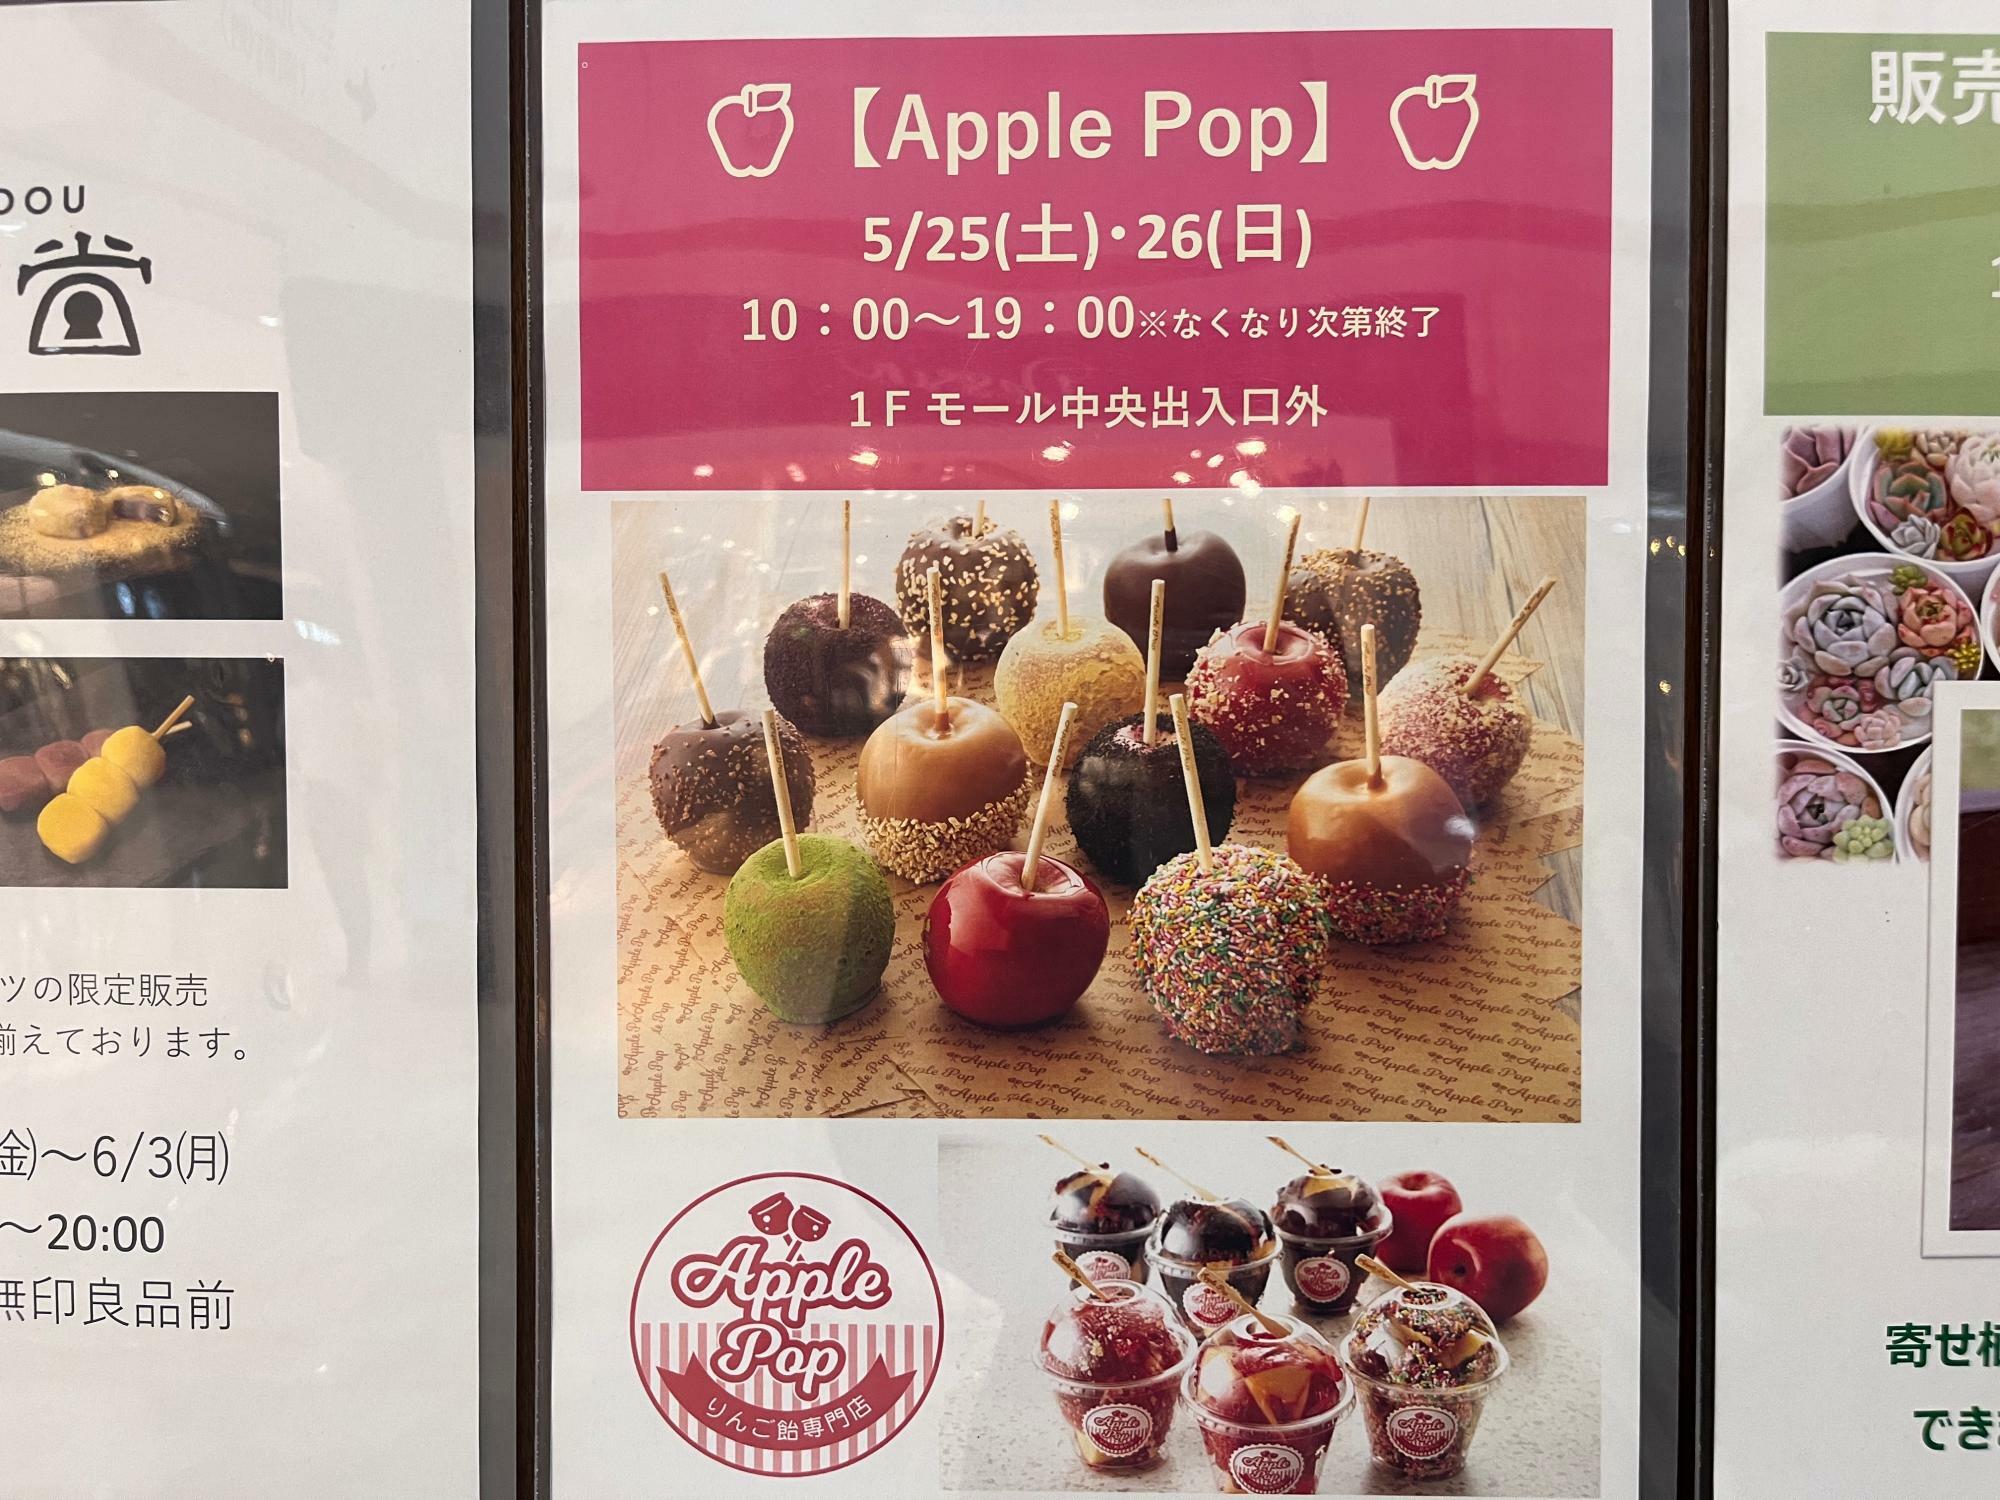 「Apple Pop」特別販売開催告知の掲示